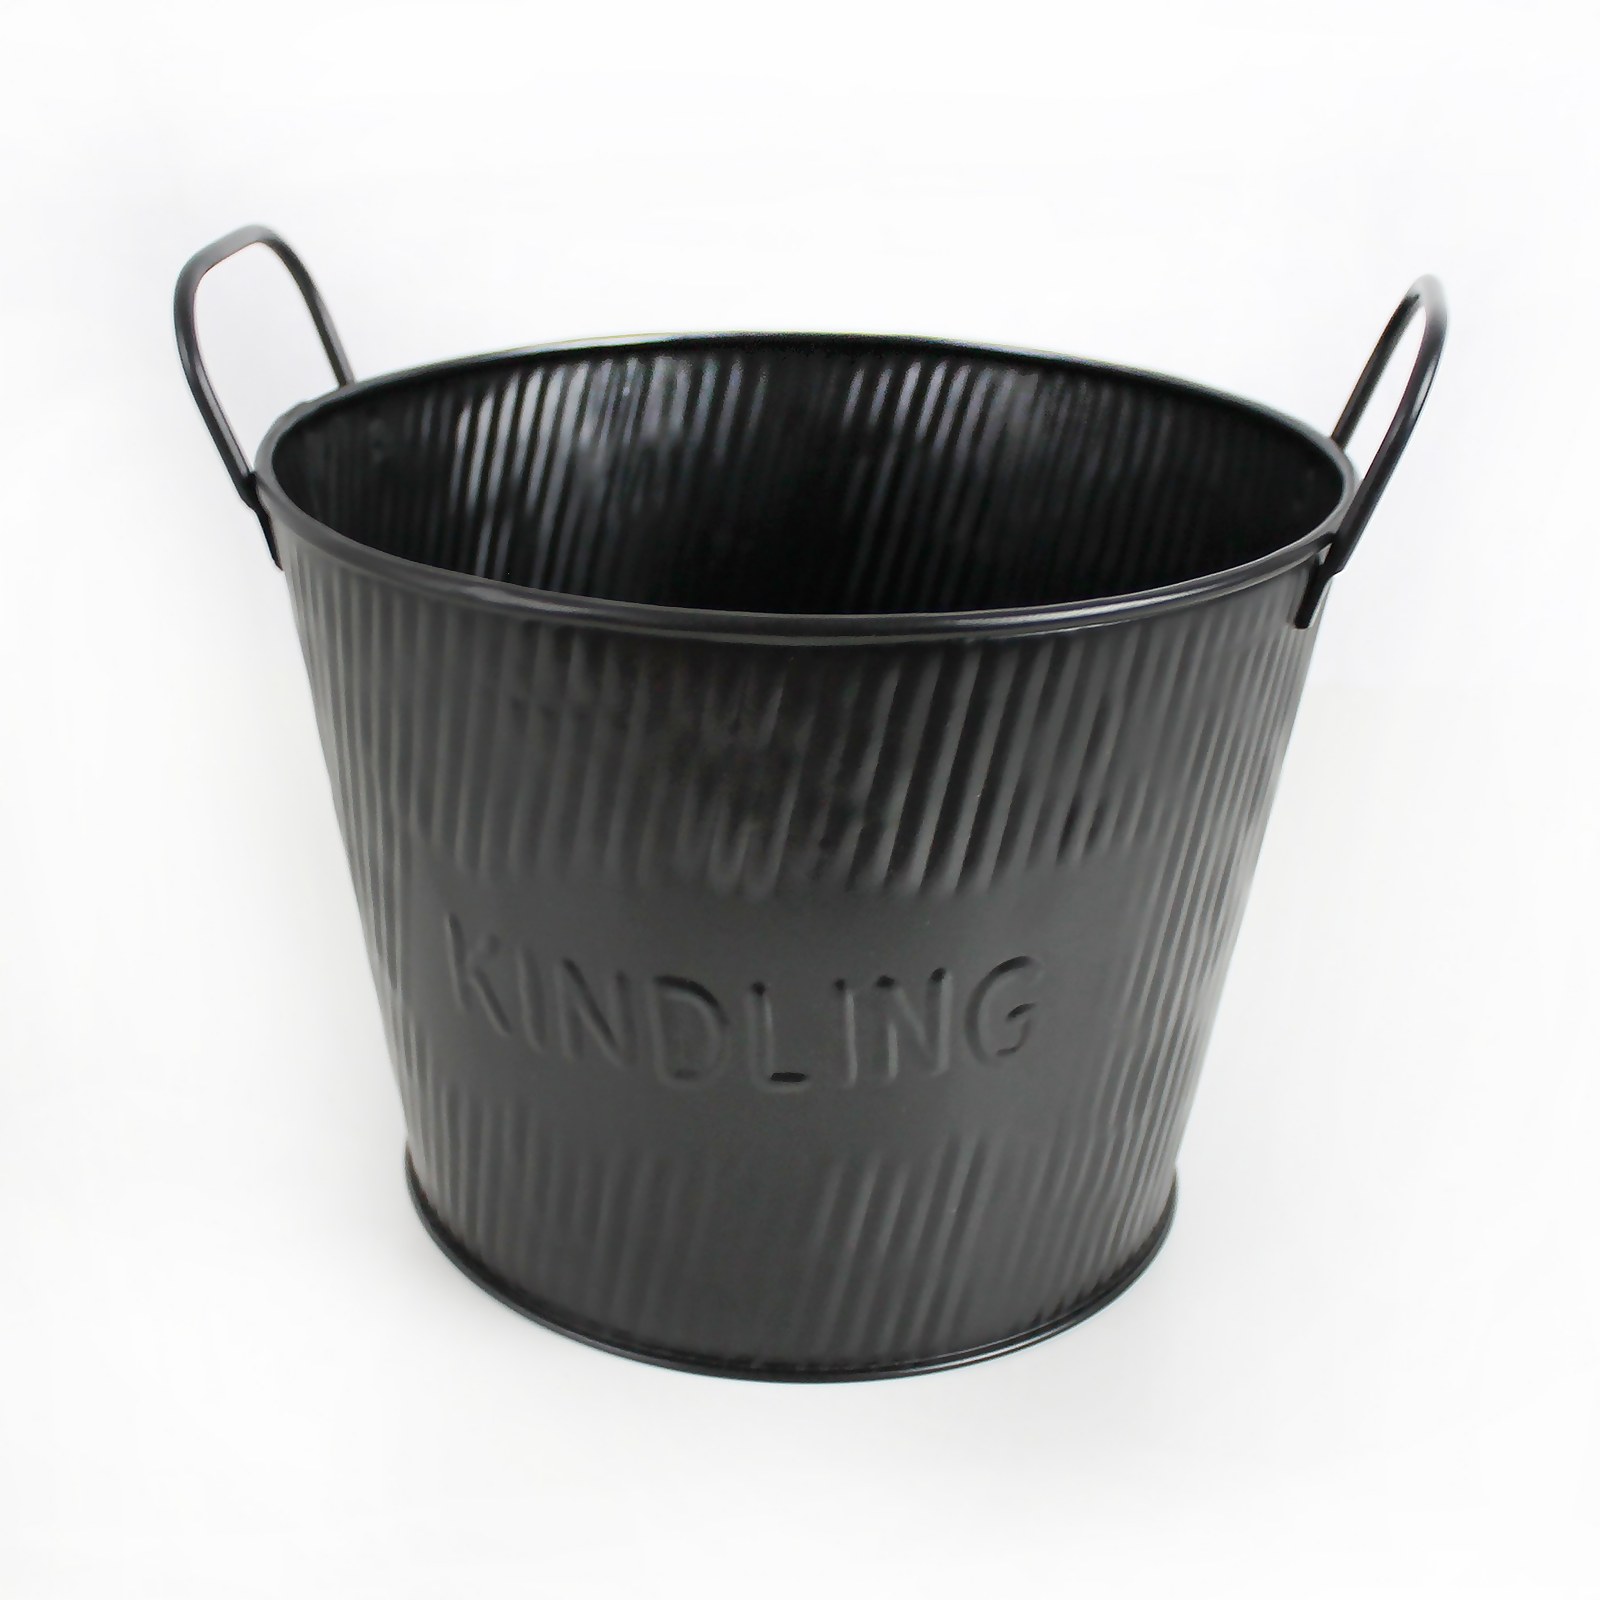 Photo of Embossed Kindling Bucket - Black